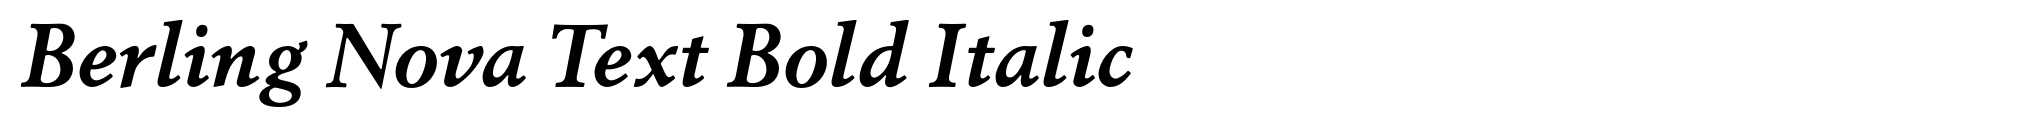 Berling Nova Text Bold Italic image